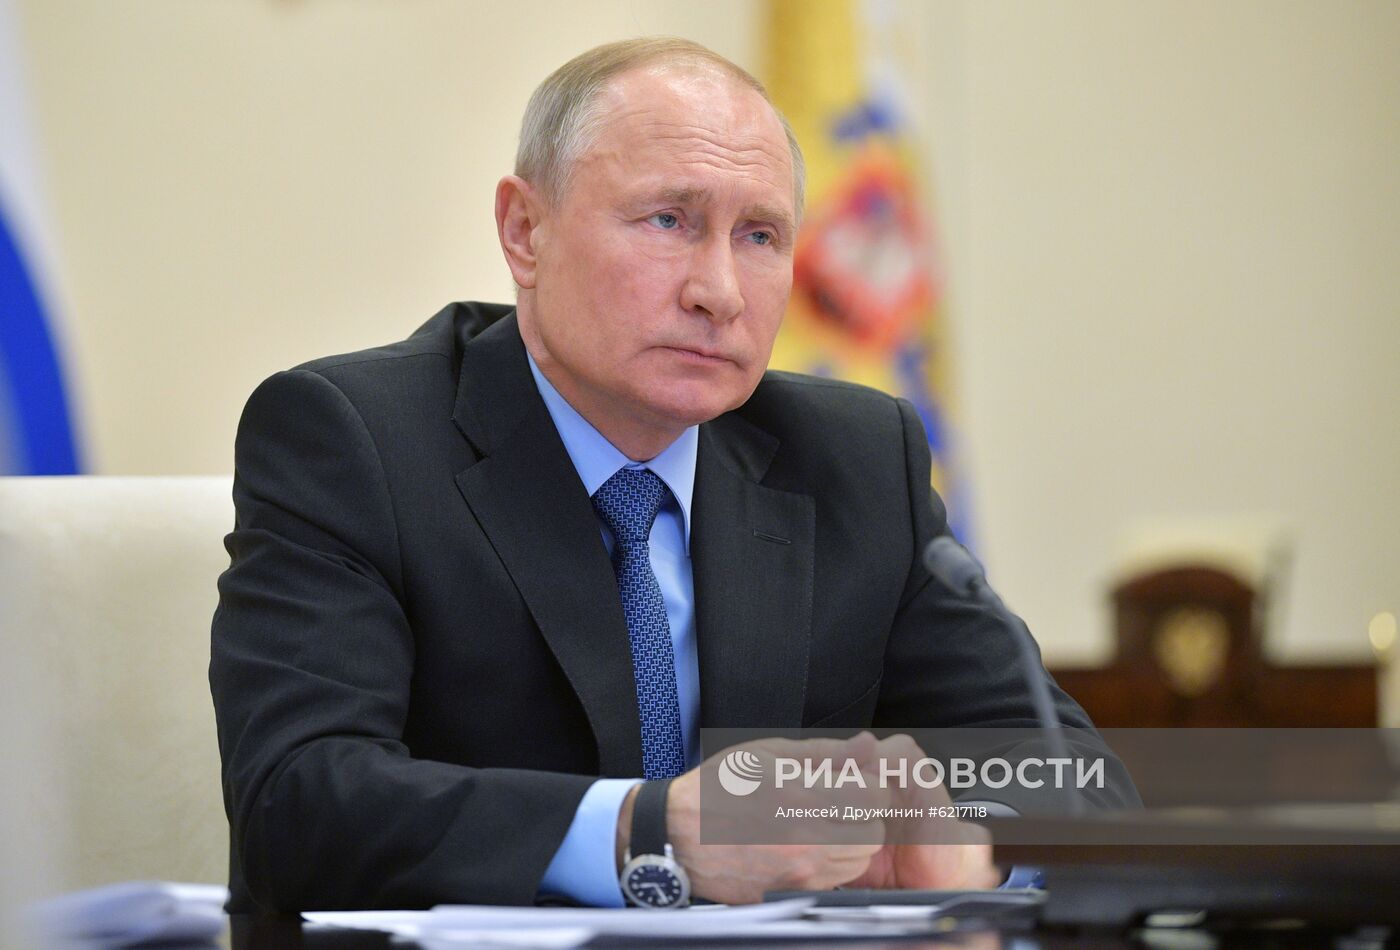 Президент РФ В. Путин провел заседание комиссии ВТС